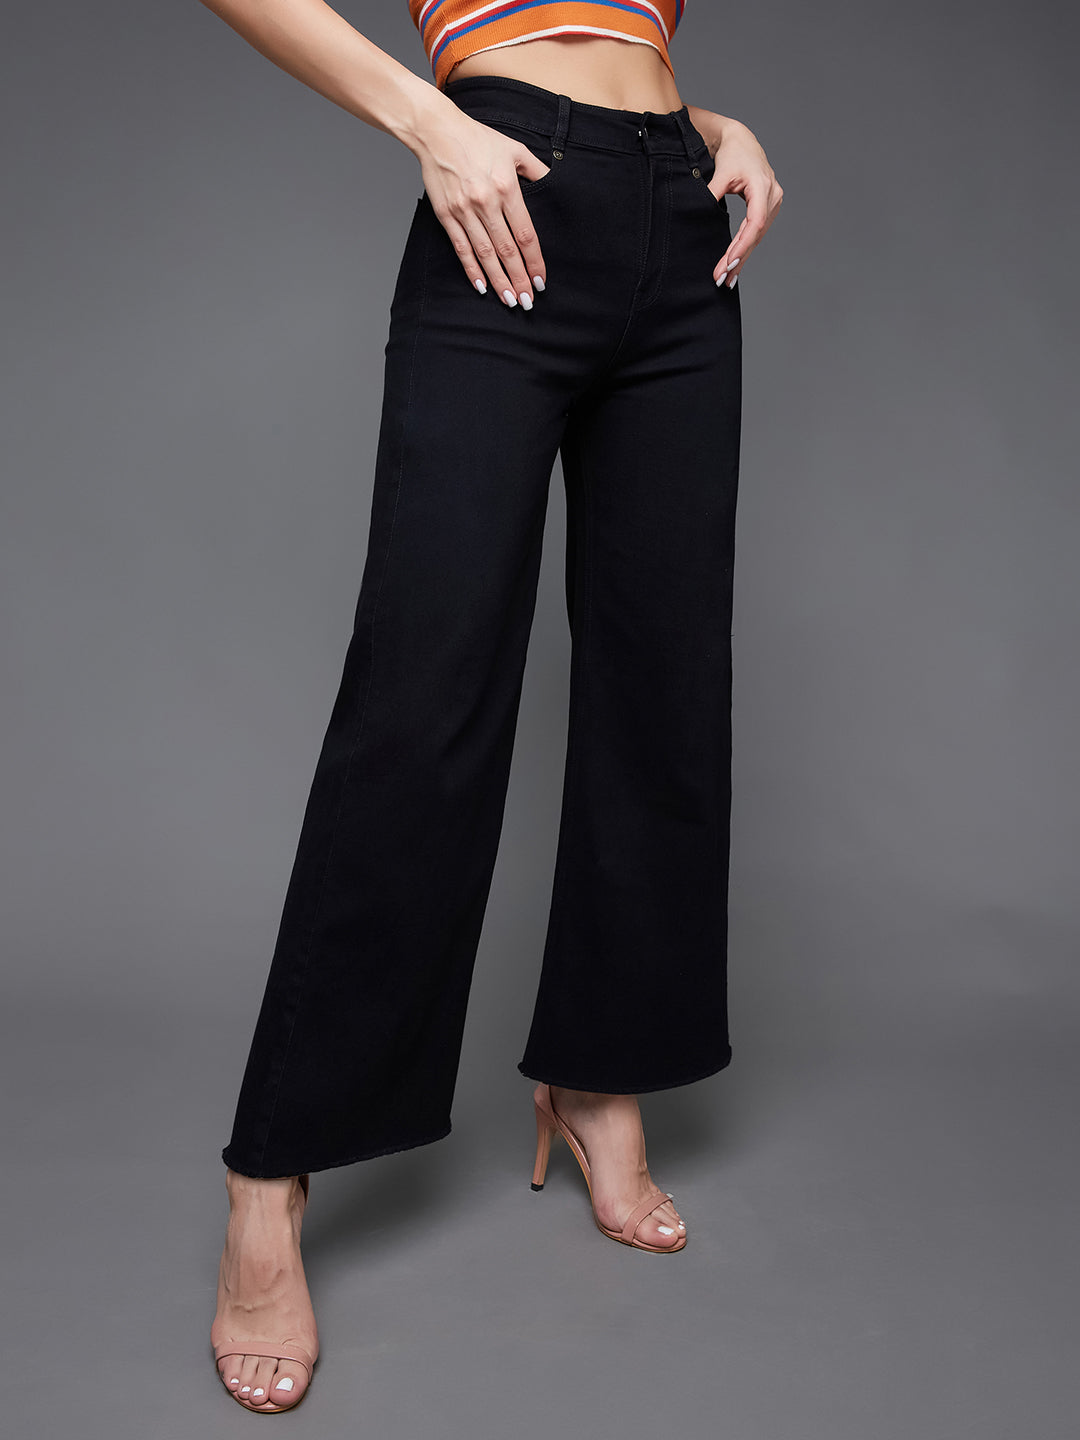 Women's Black High Rise Clean Look Regular-Length Stretchable Wide Leg Denim Jeans